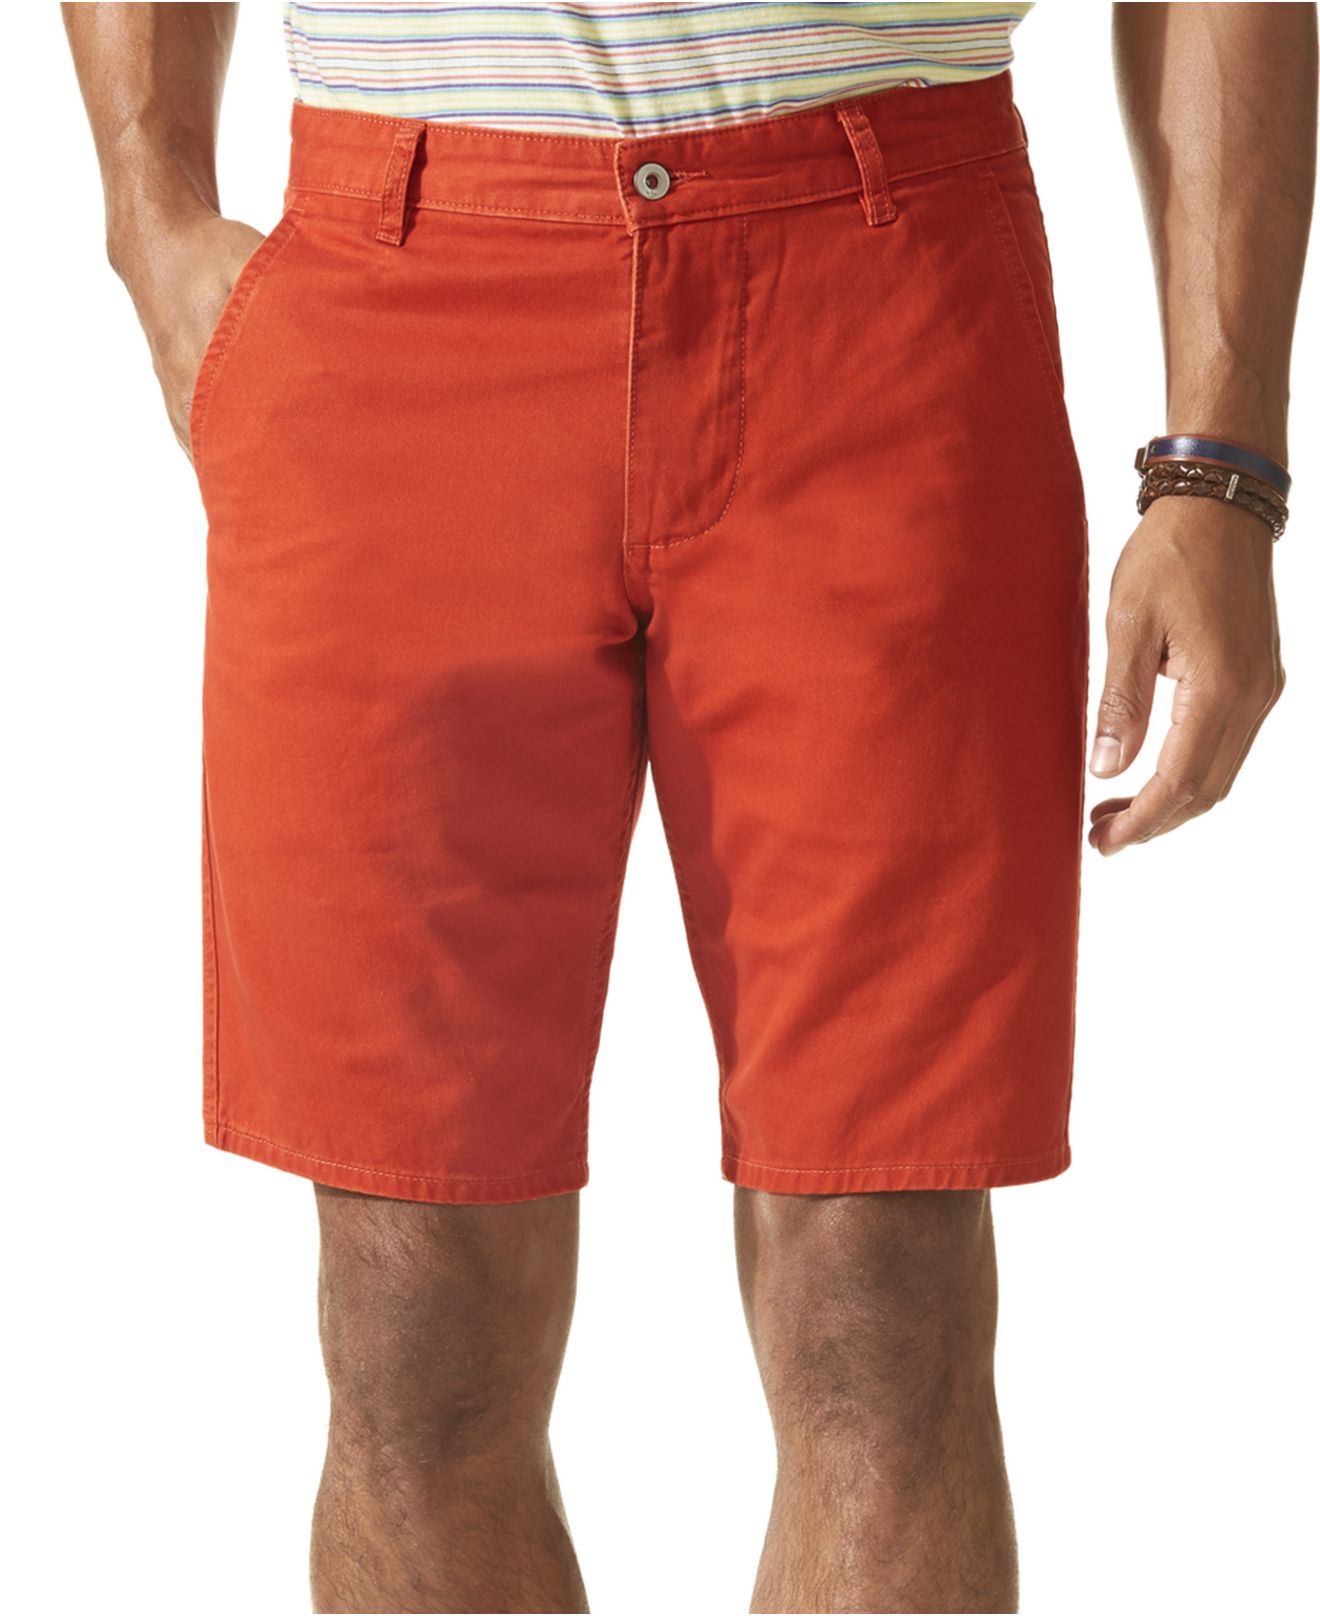 Lyst - Dockers Alpha Flat Front Khaki Shorts in Orange for Men